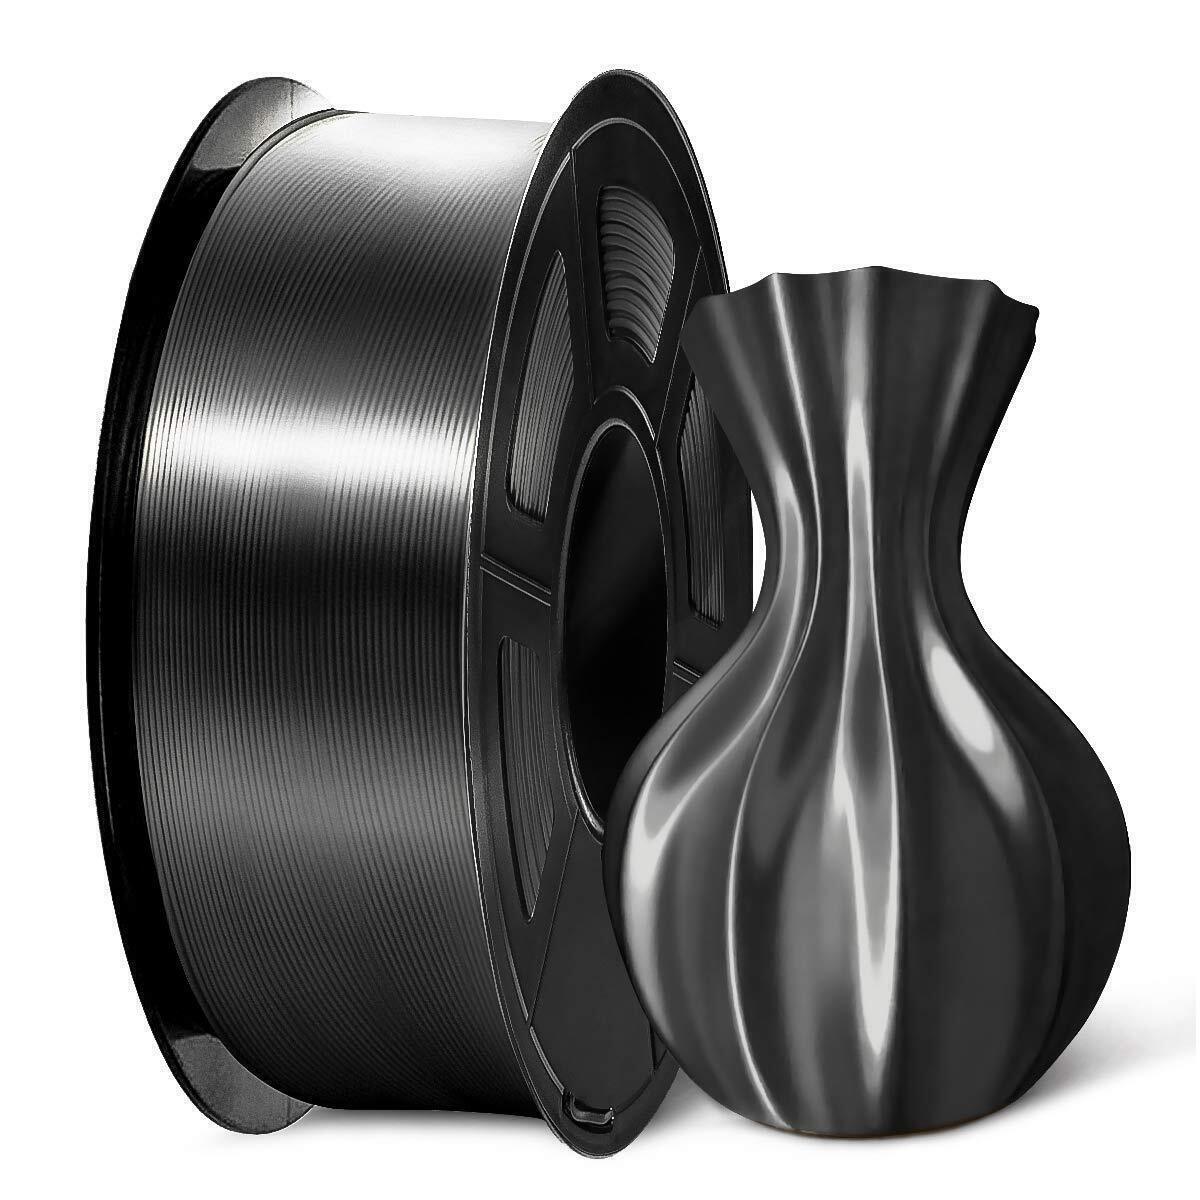 SUNLU 1KG PLA+ SILK 3D Printer Filament SILK 1.75mm NEW Dual &Triple Colors